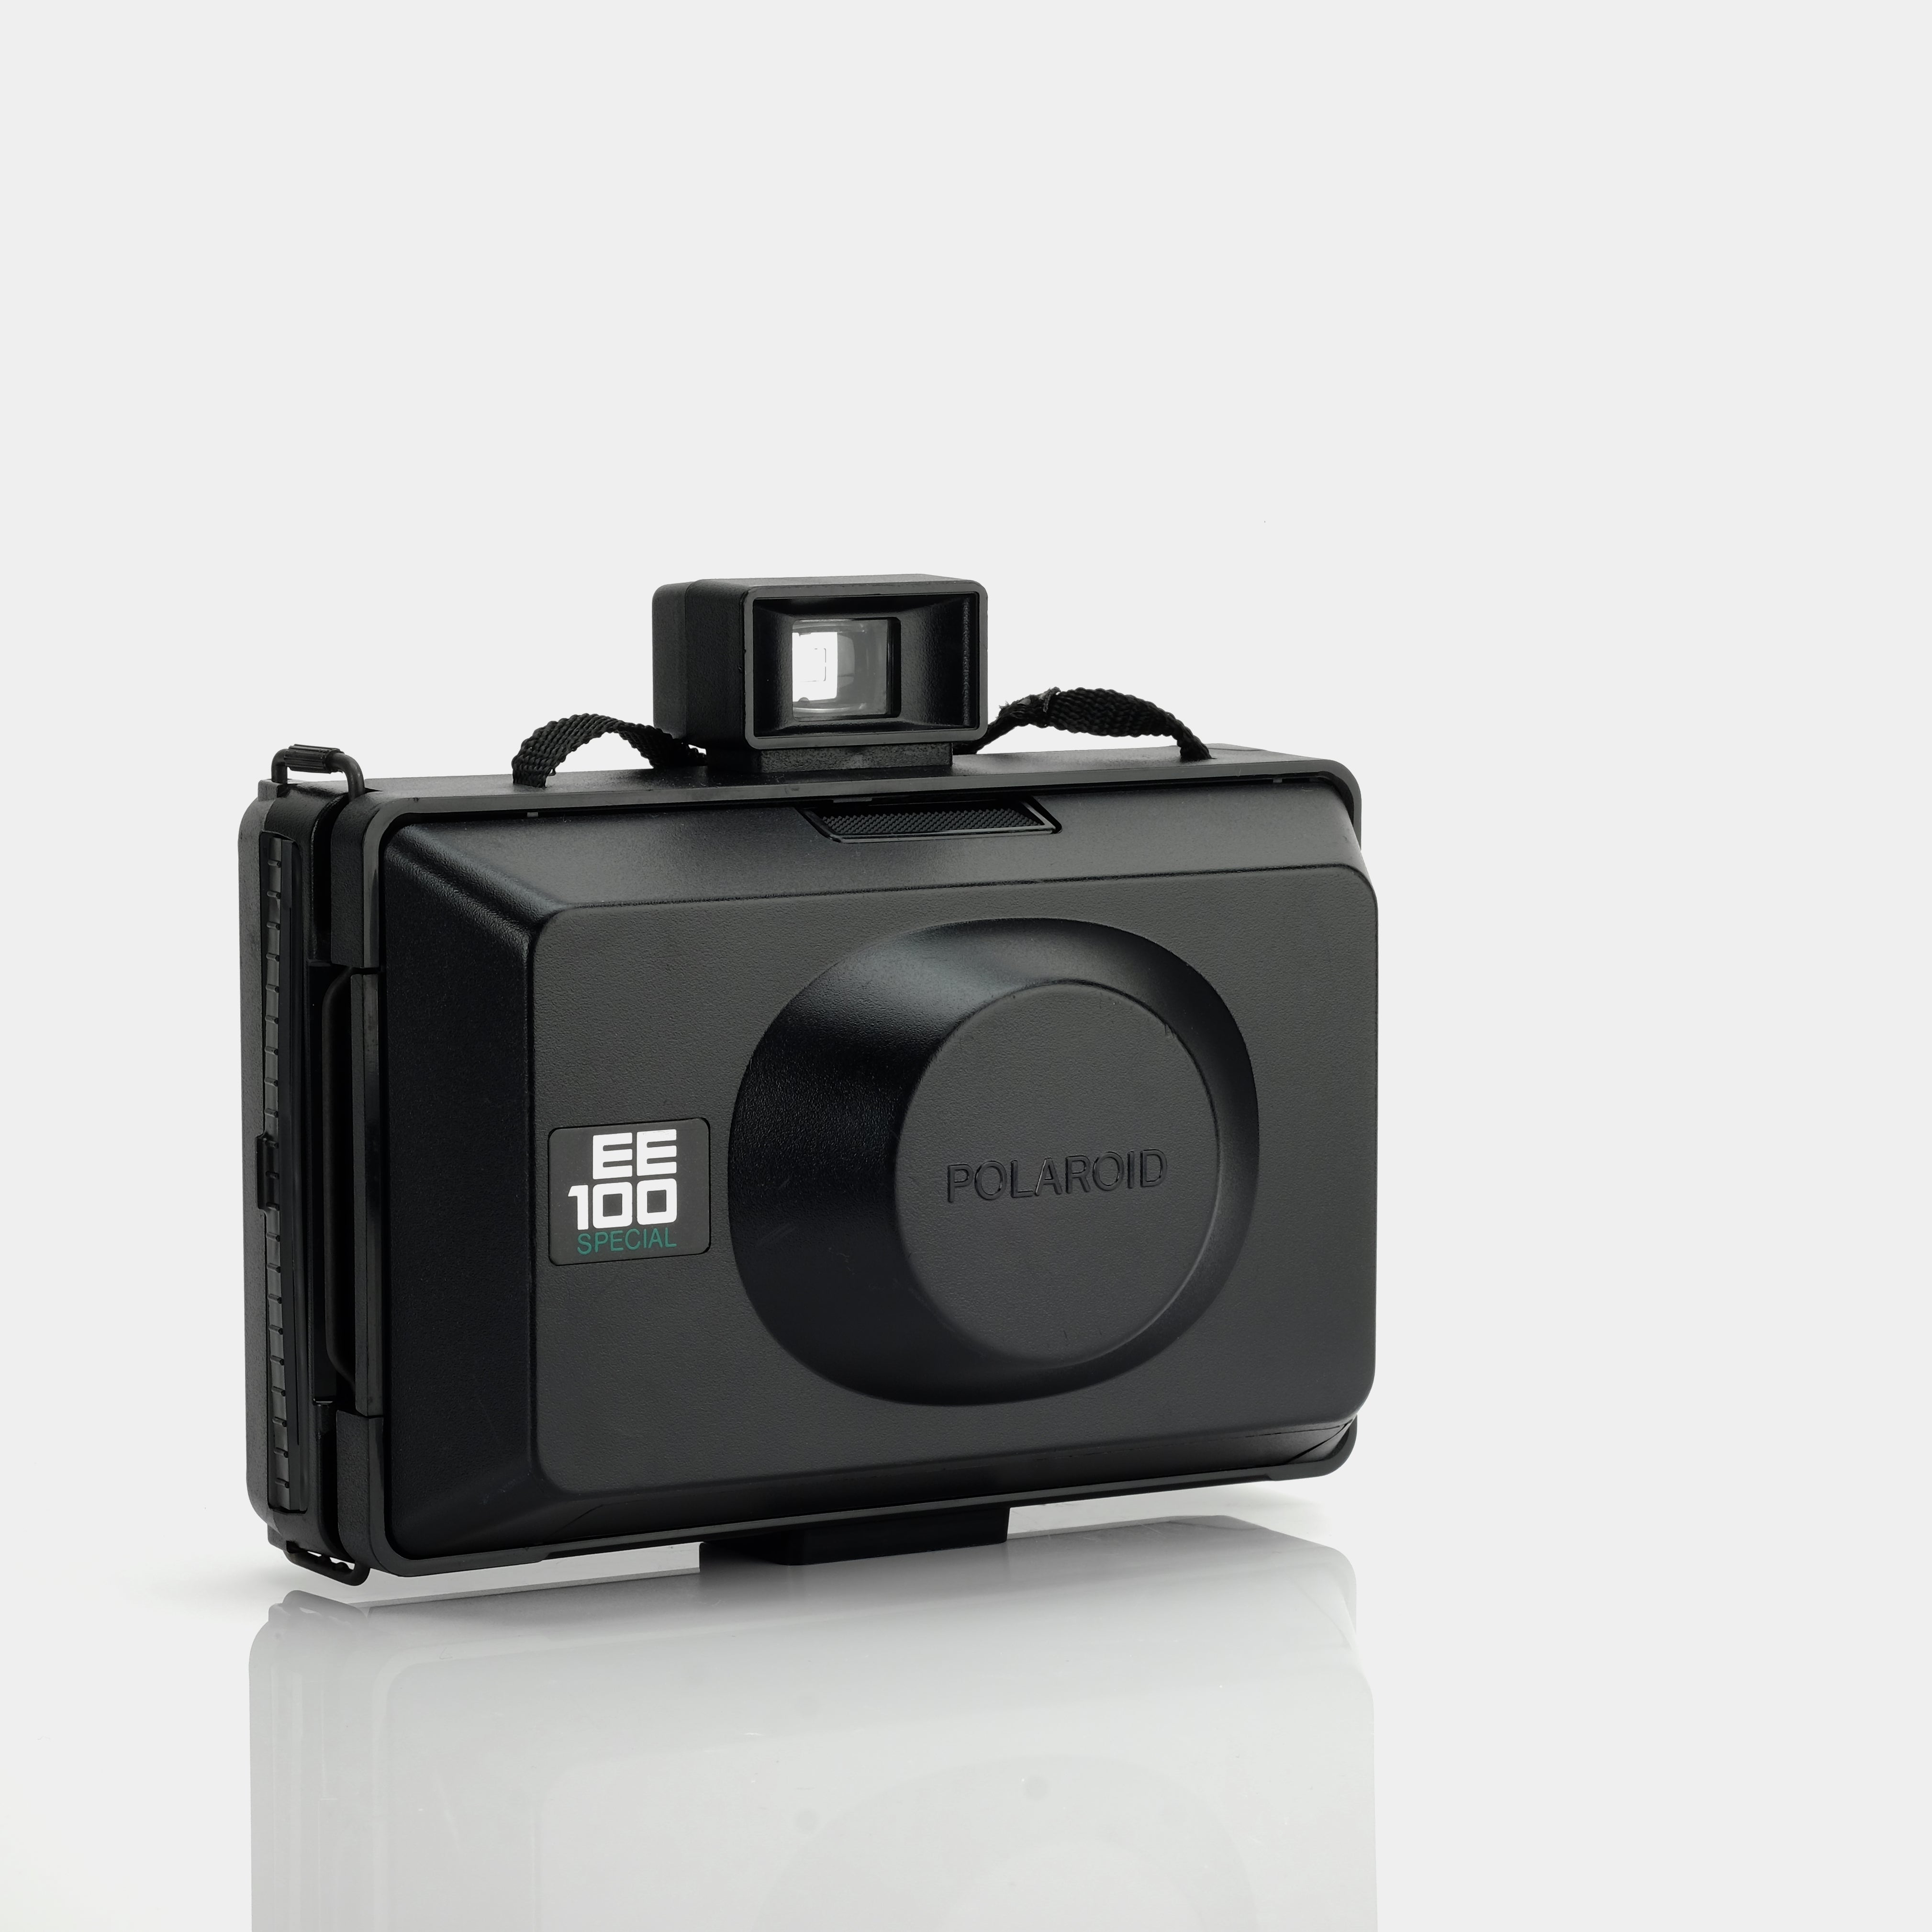 Polaroid EE100 Special Packfilm Land Camera